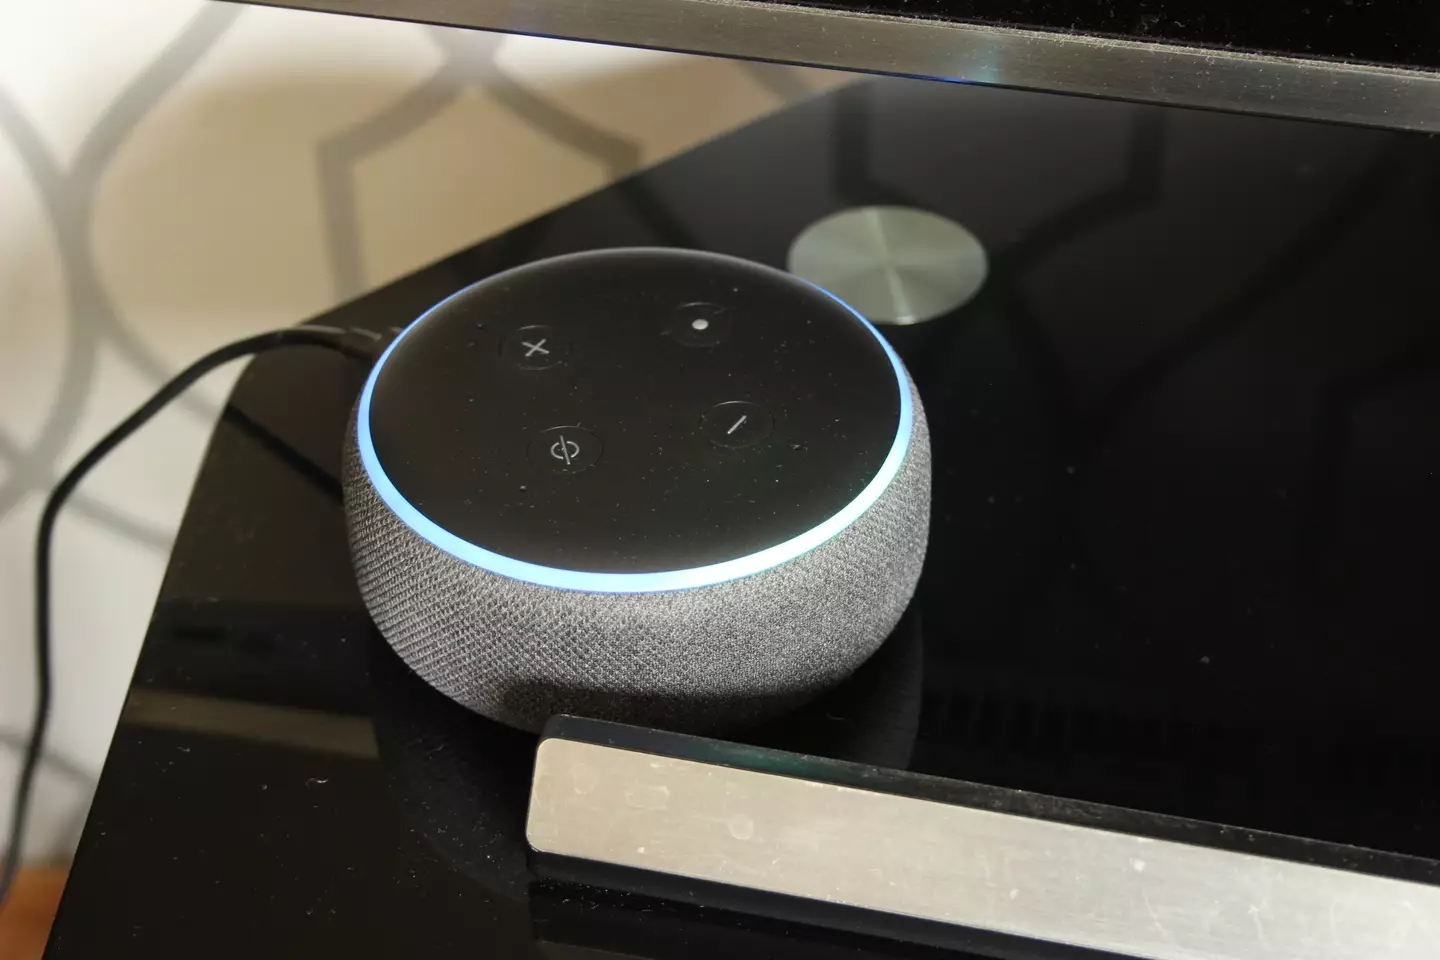 Alexa is Amazon's cloud-based voice service.